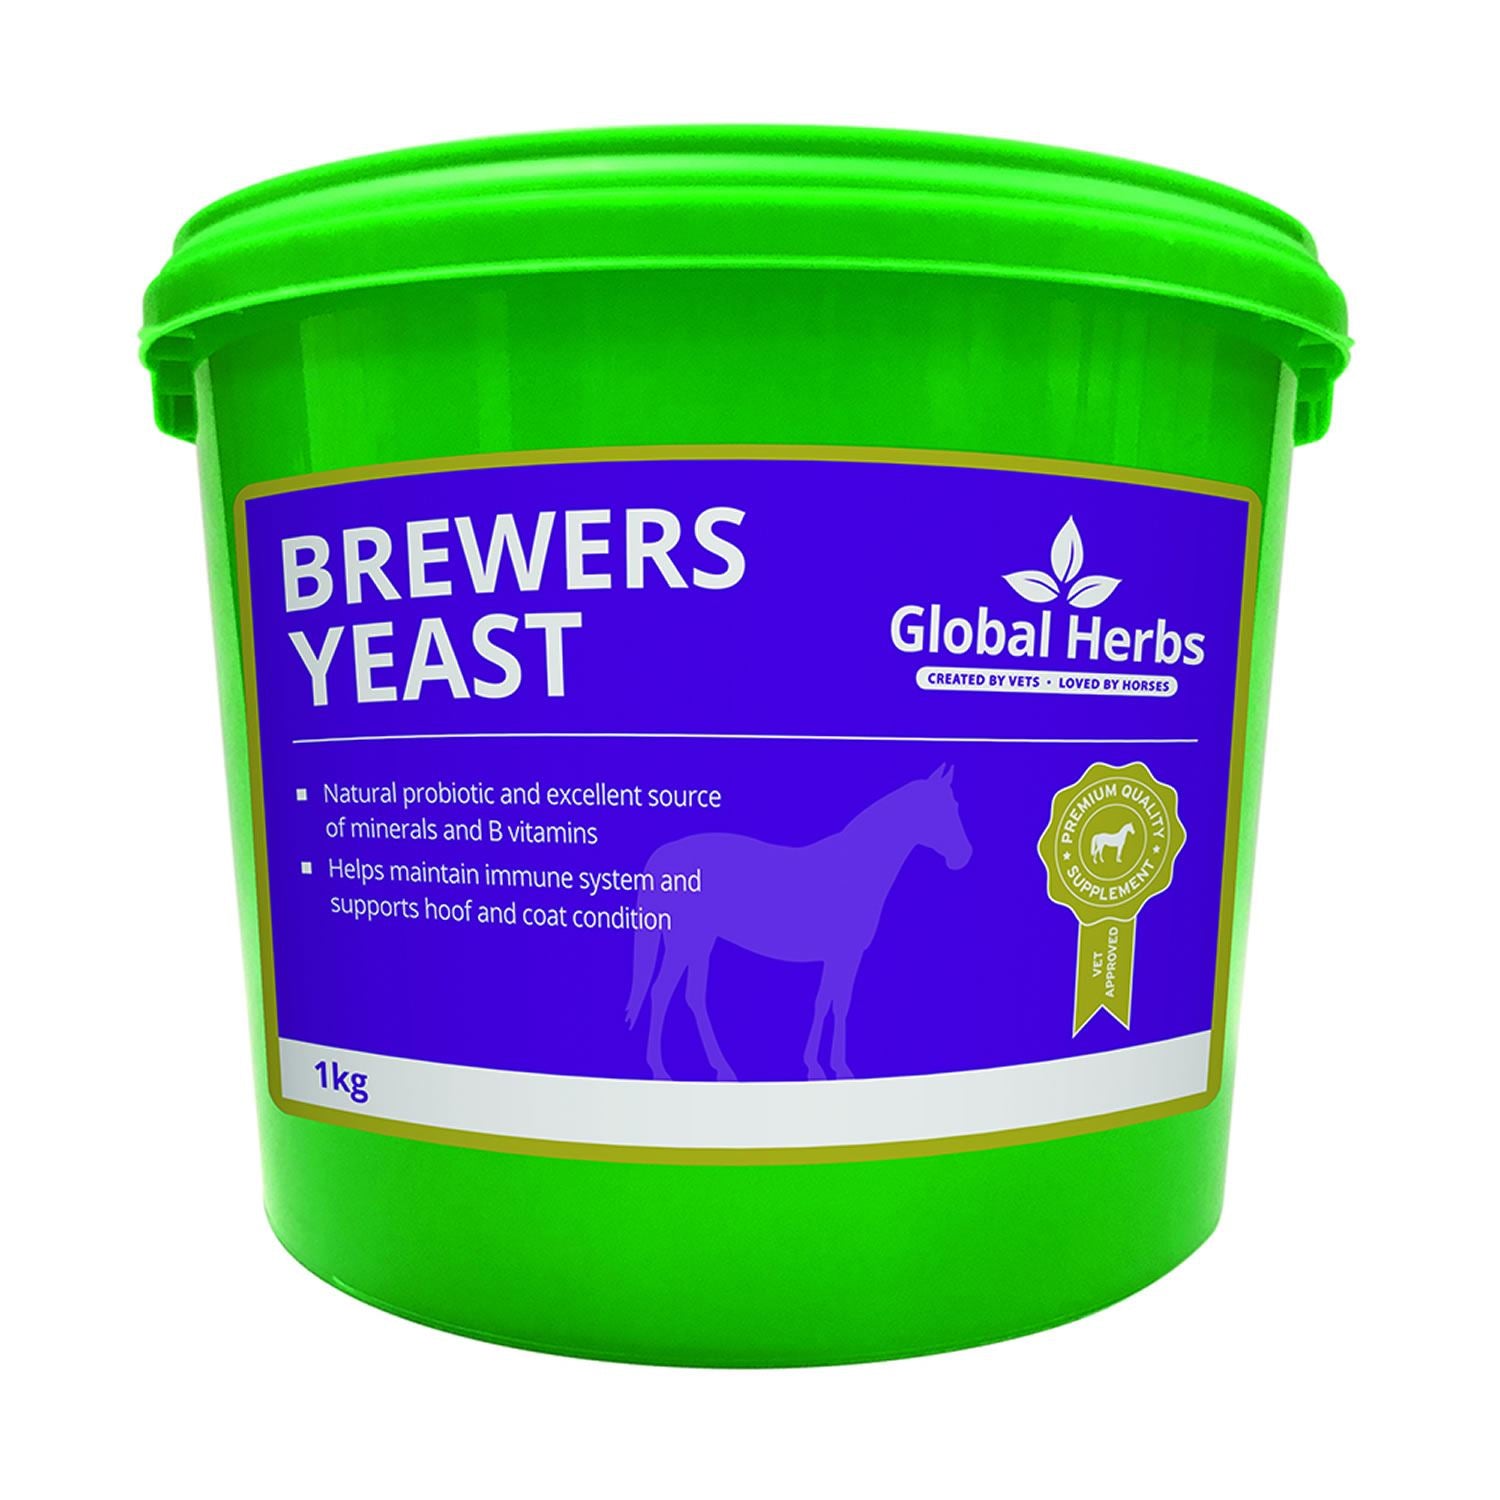 Global Herbs Brewers Yeast - Just Horse Riders